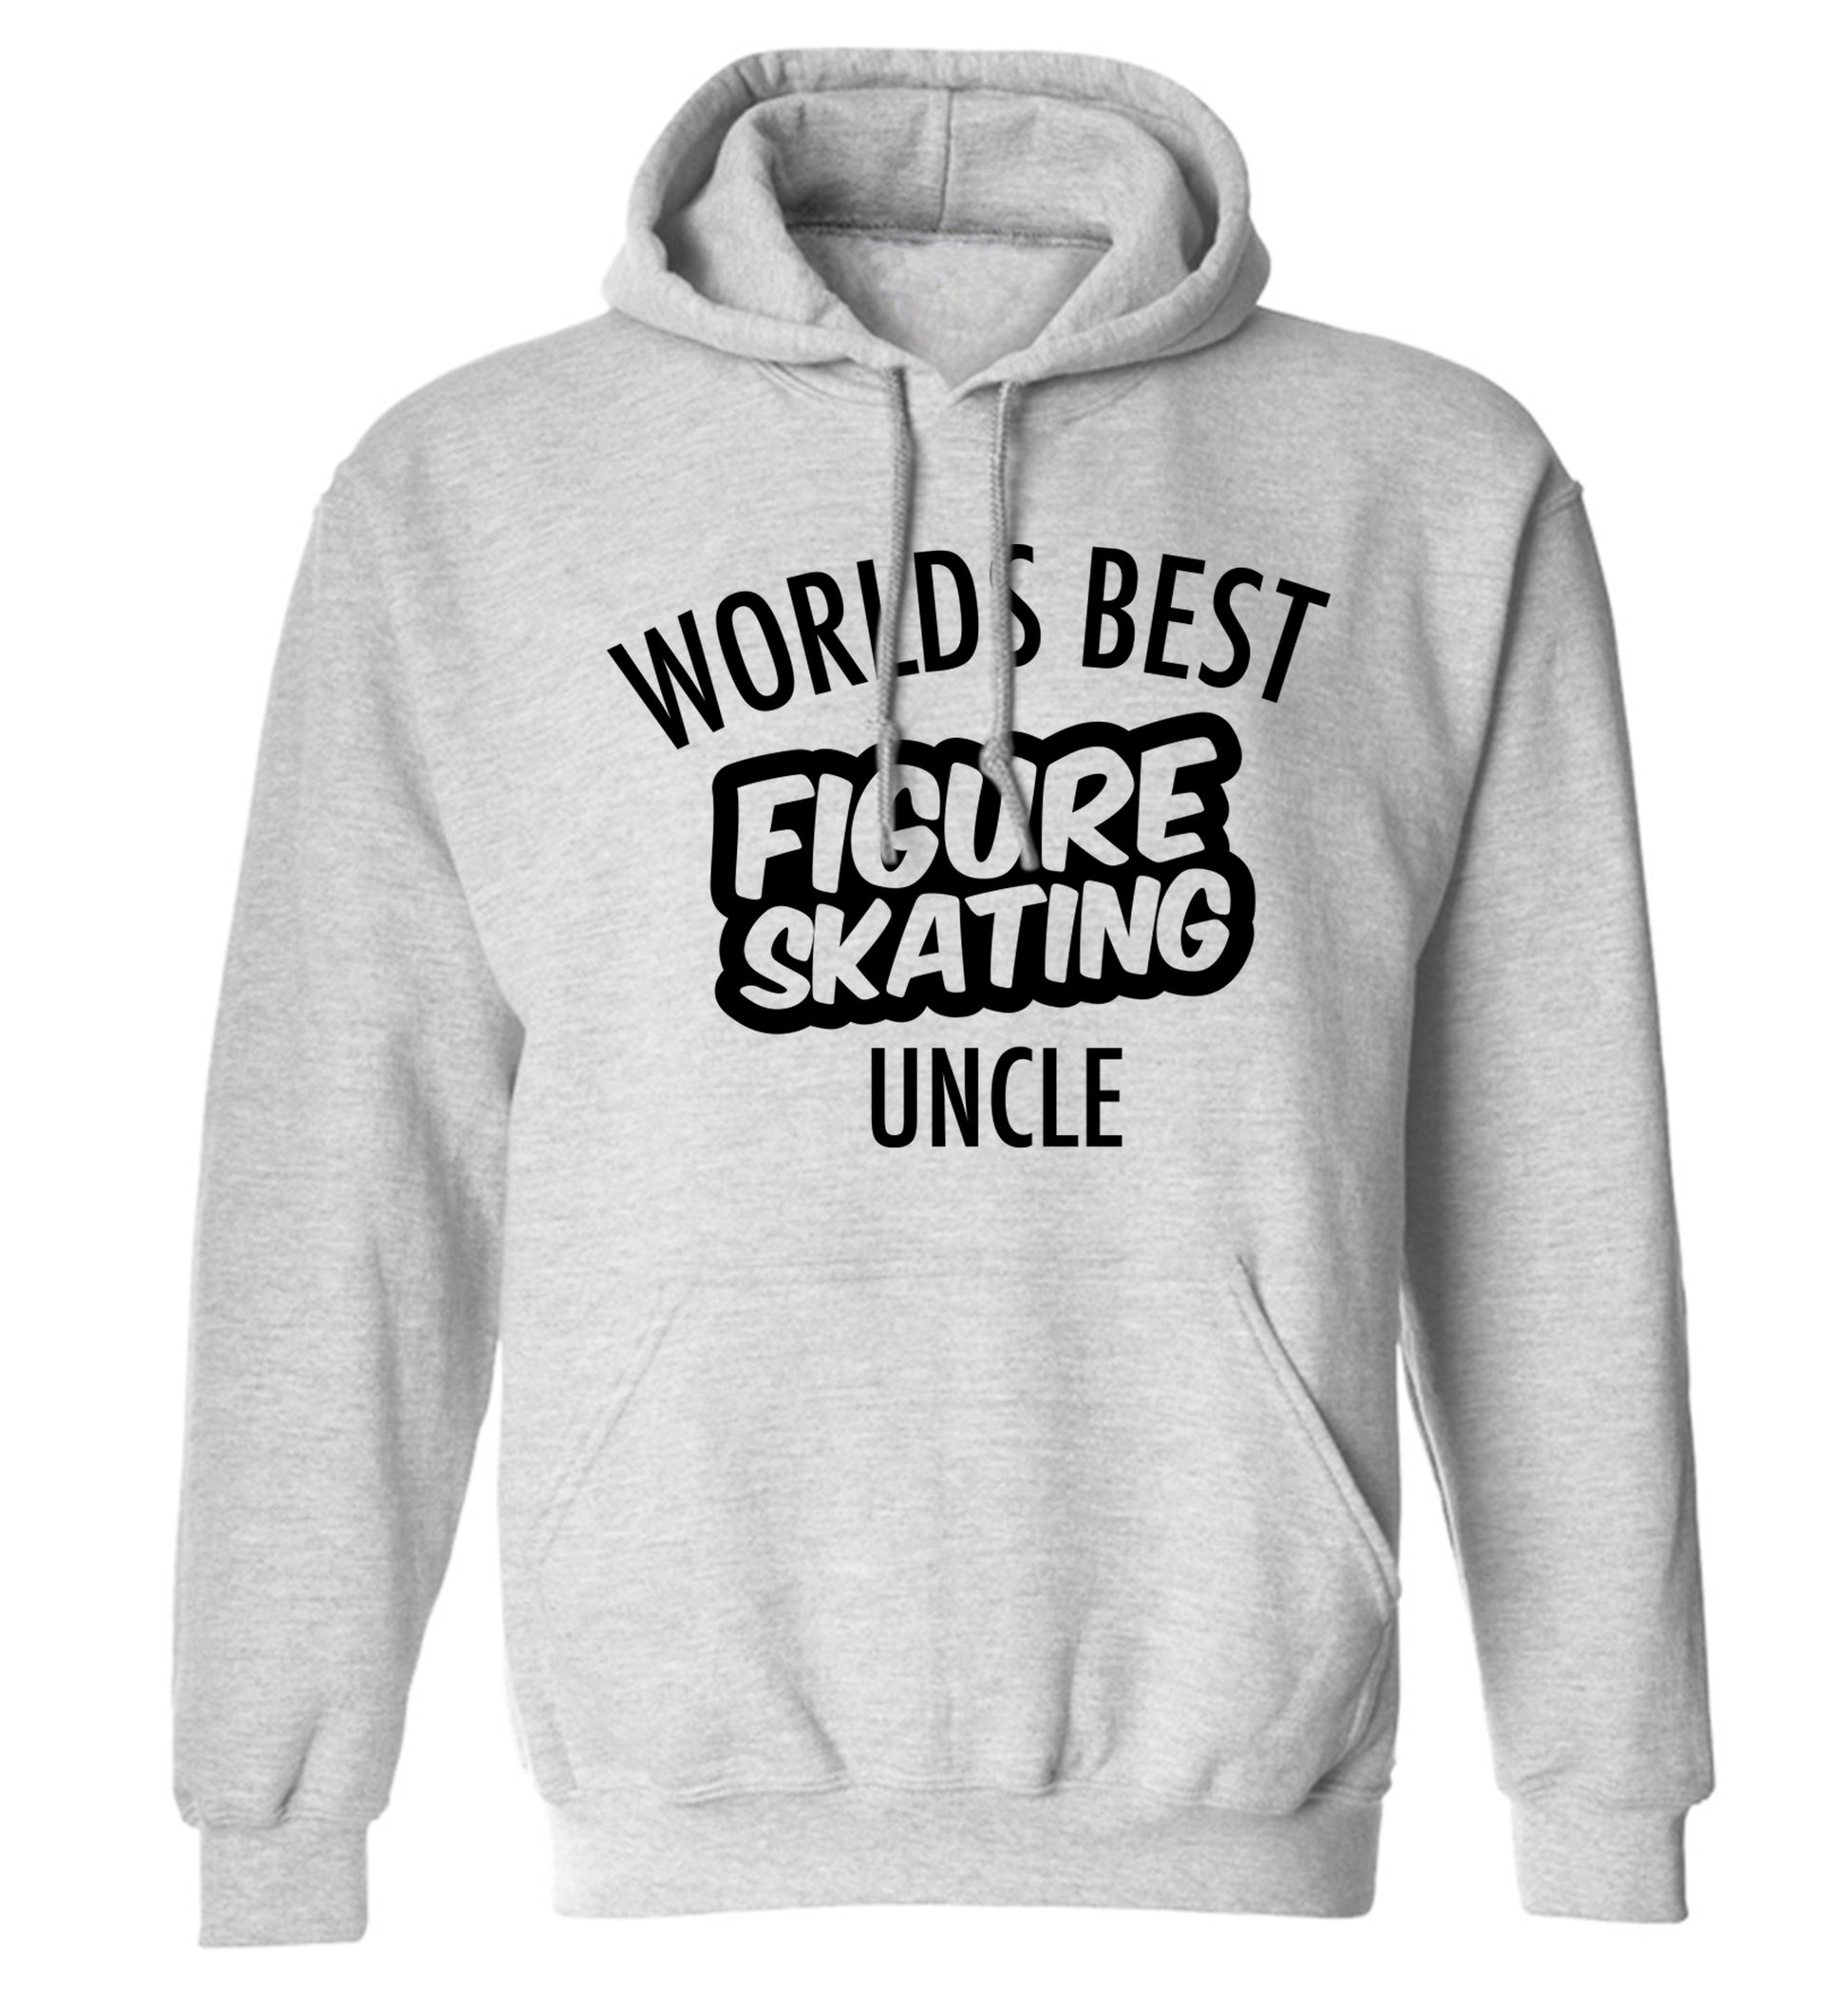 Worlds best figure skating uncle adults unisexgrey hoodie 2XL